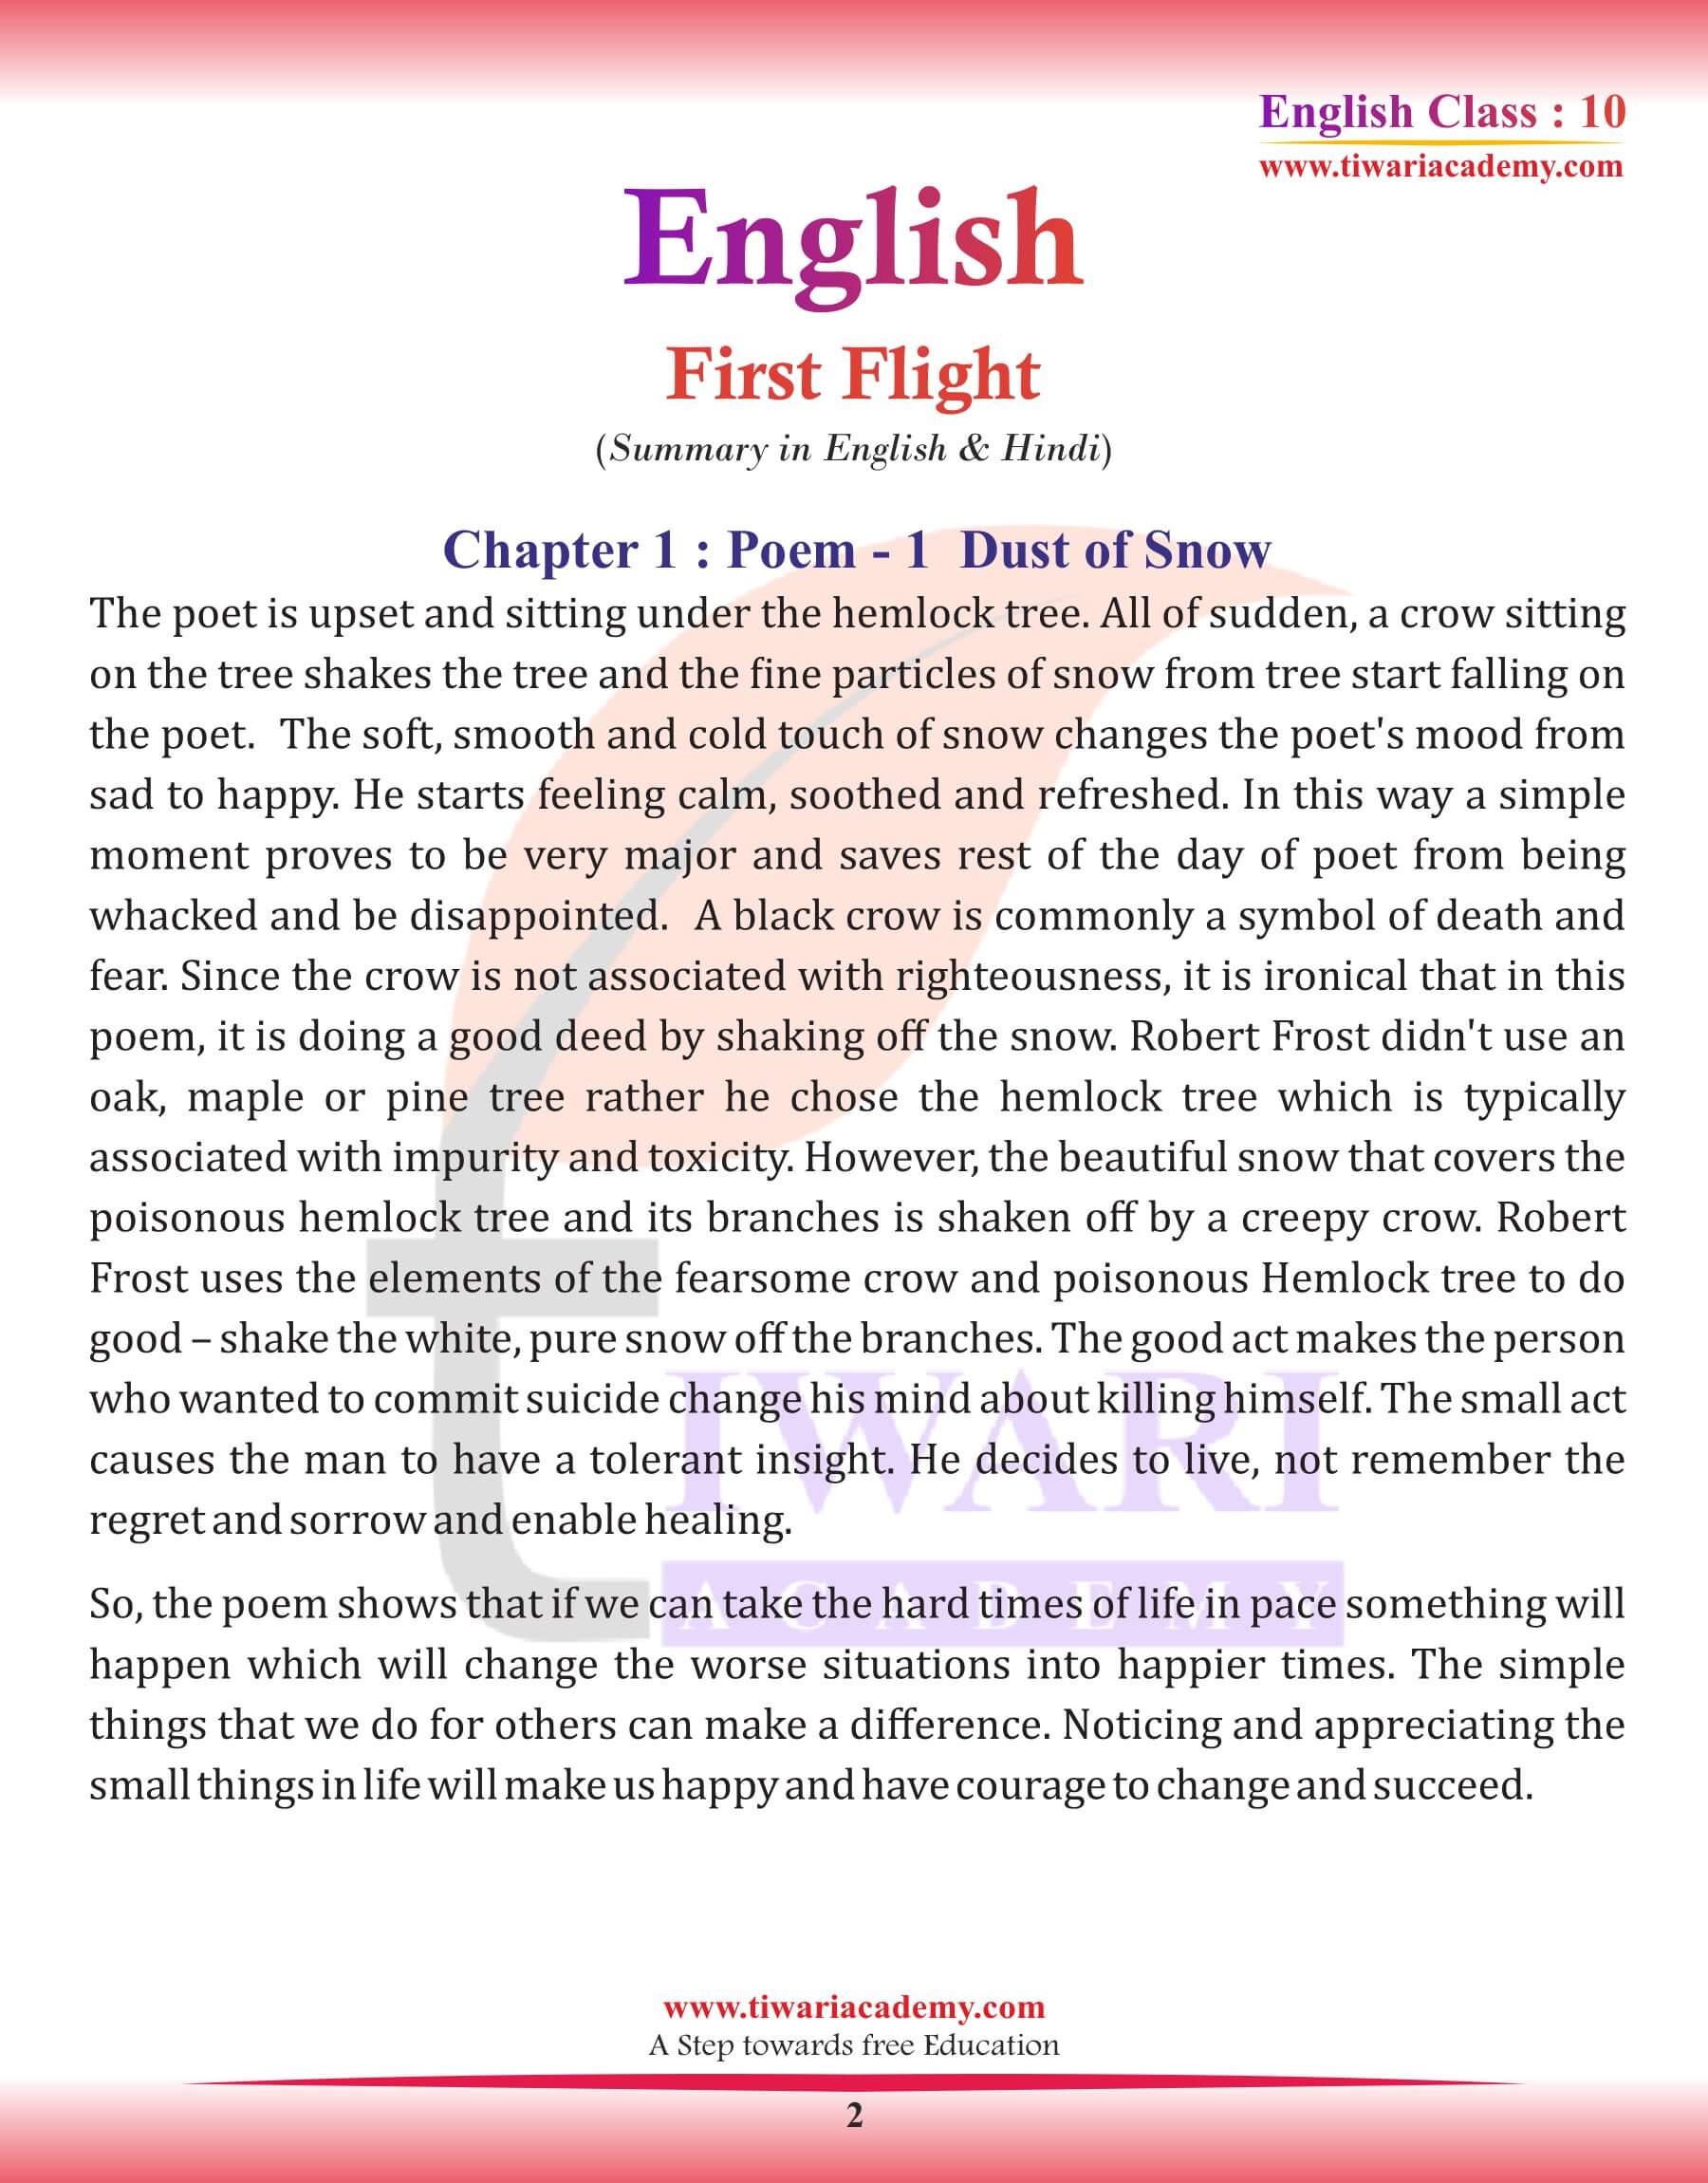 Class 10 English Chapter 1 Summary in Hindi